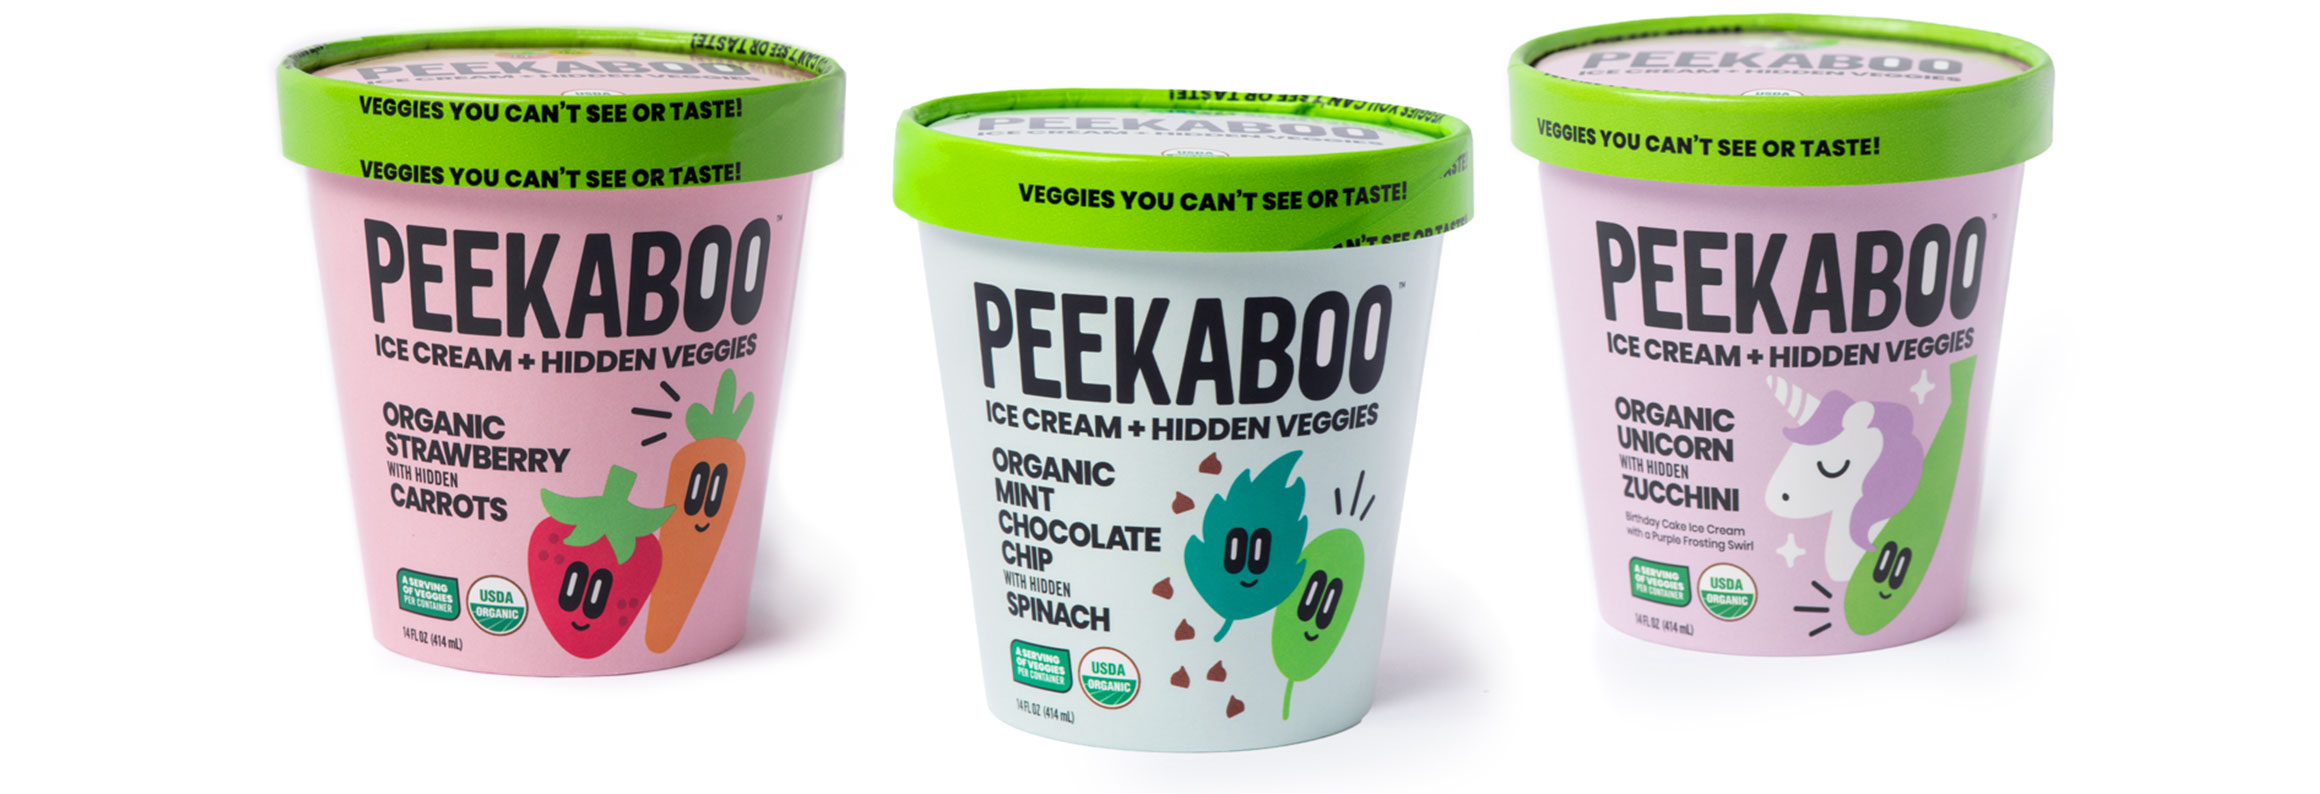 peekaboo ice cream - food and beverage brand